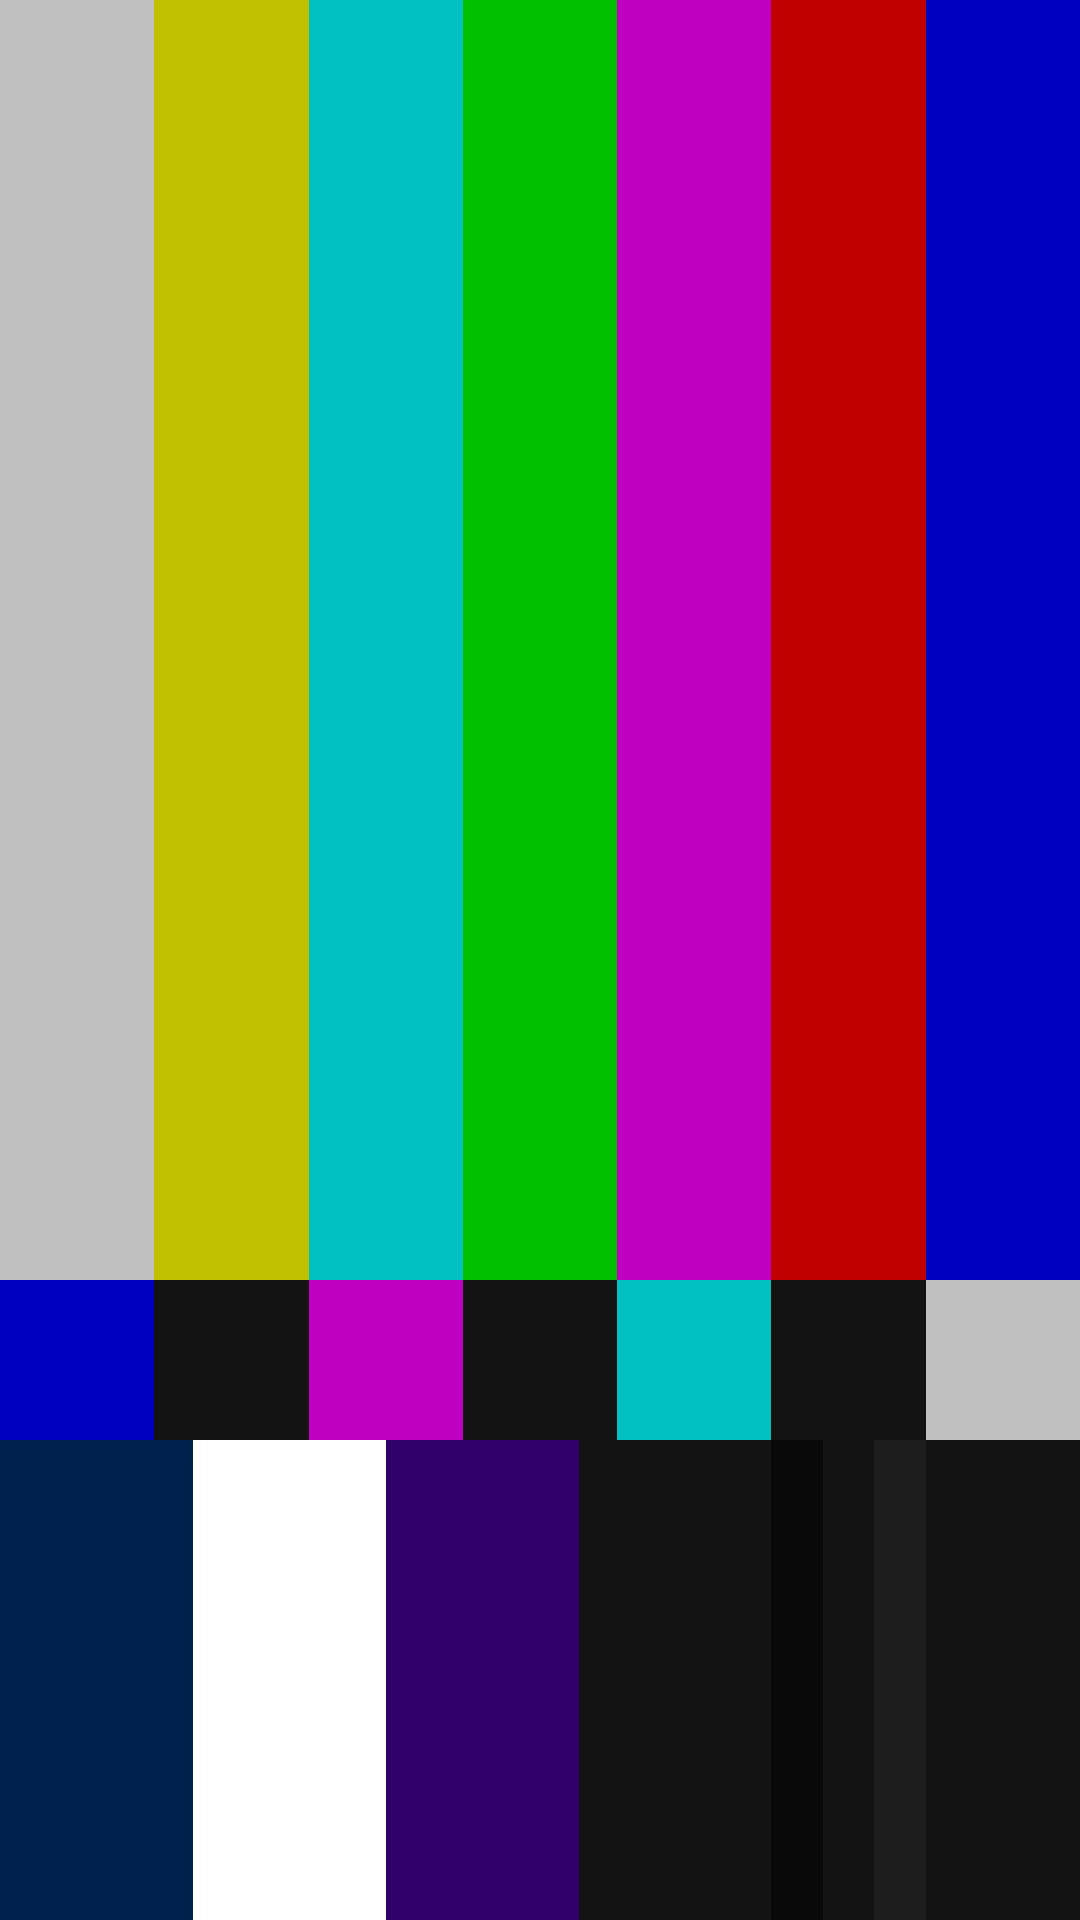 Static Tv Color Bars Background